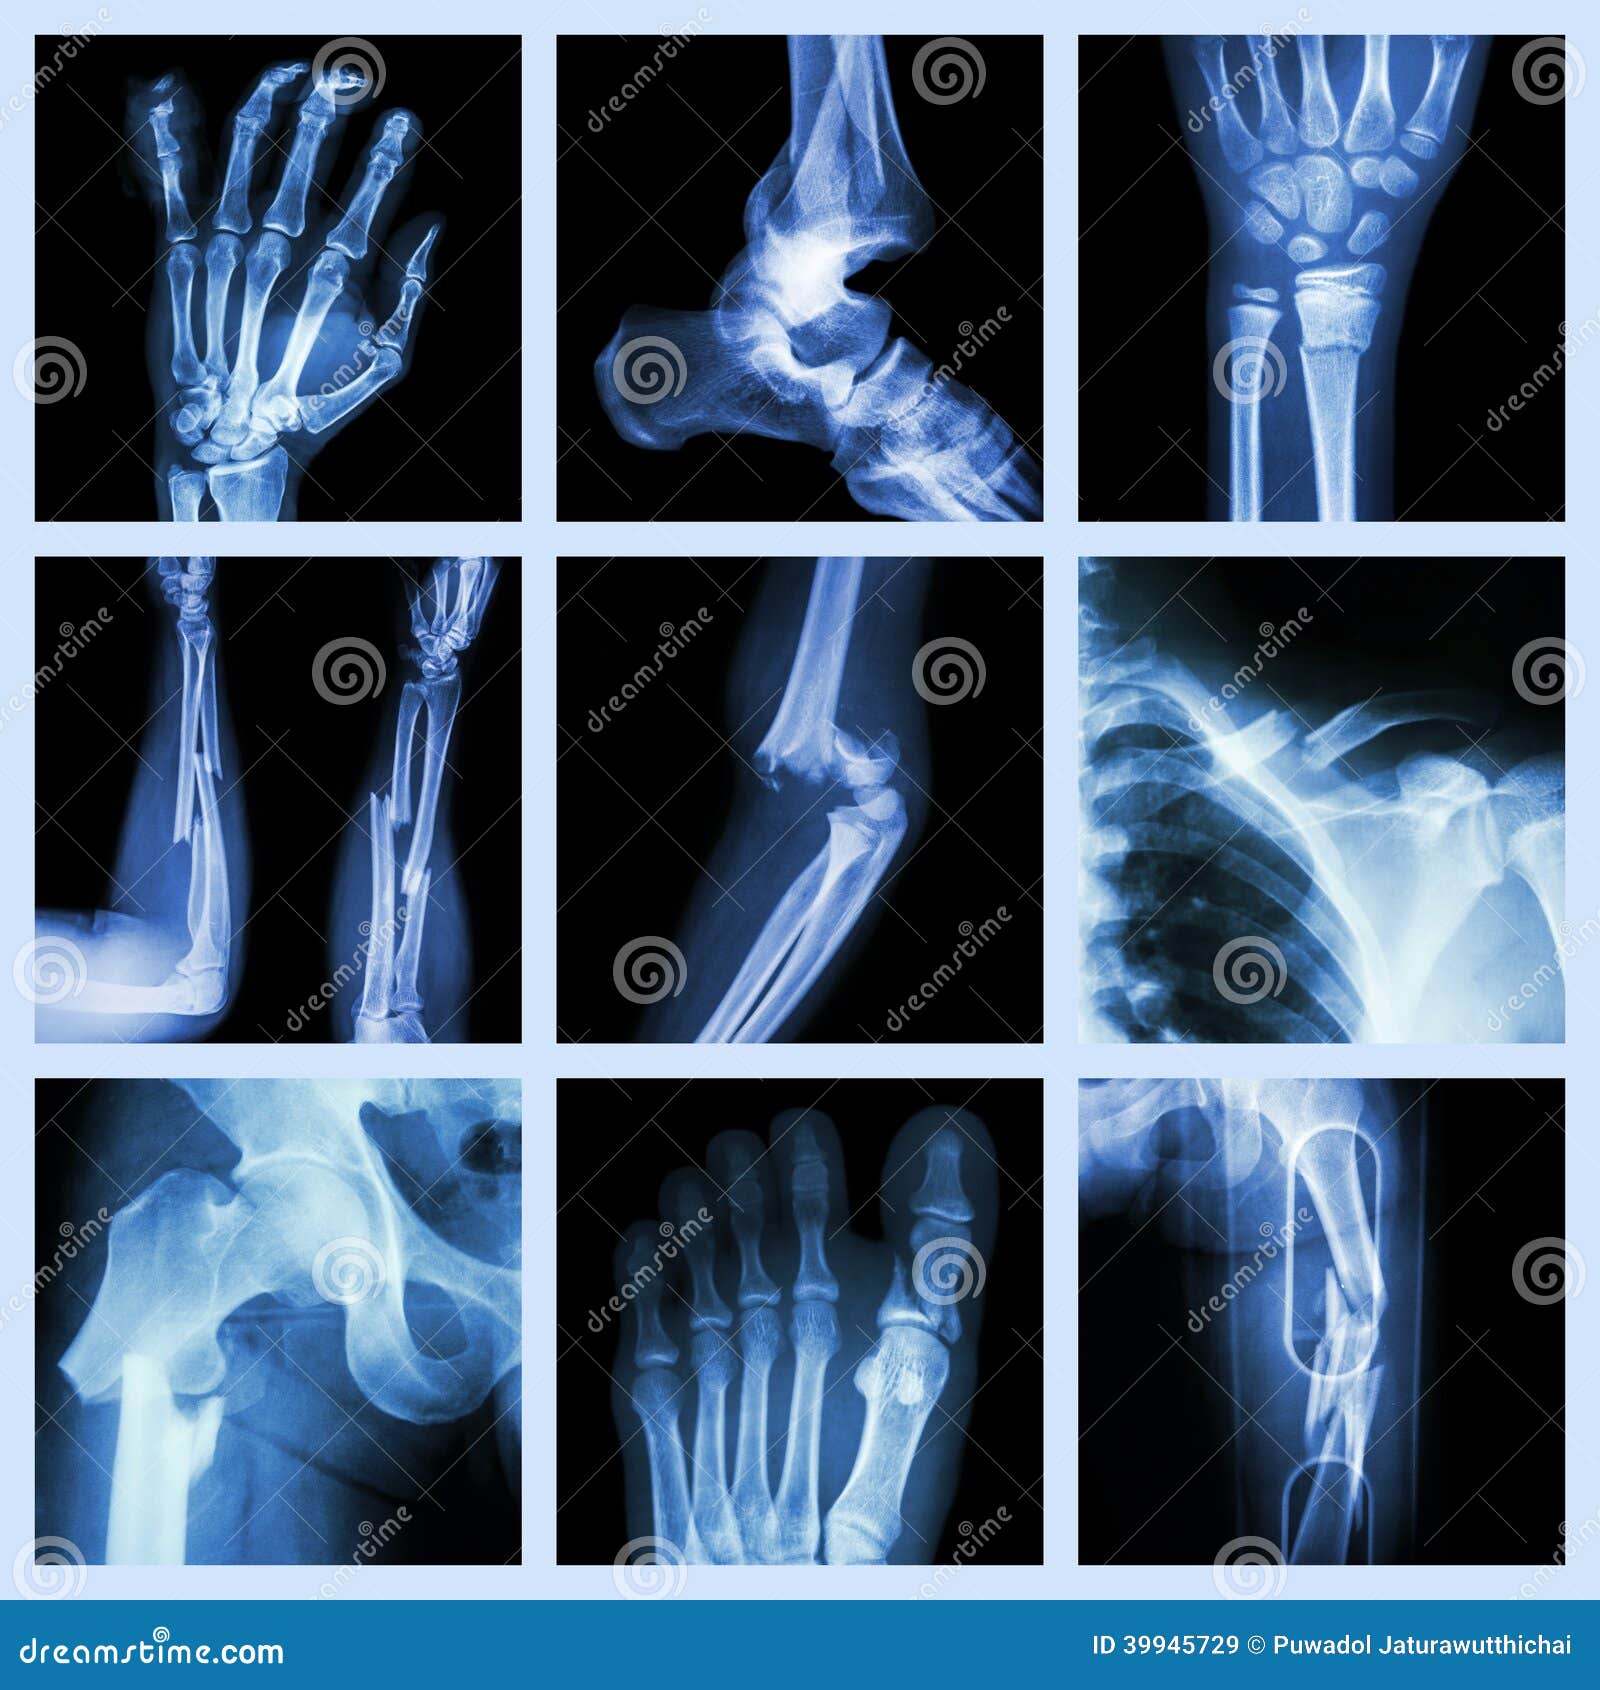 Рентгенограмма перелом кости. Срастание кости на рентгене. Переломы костей рентген.